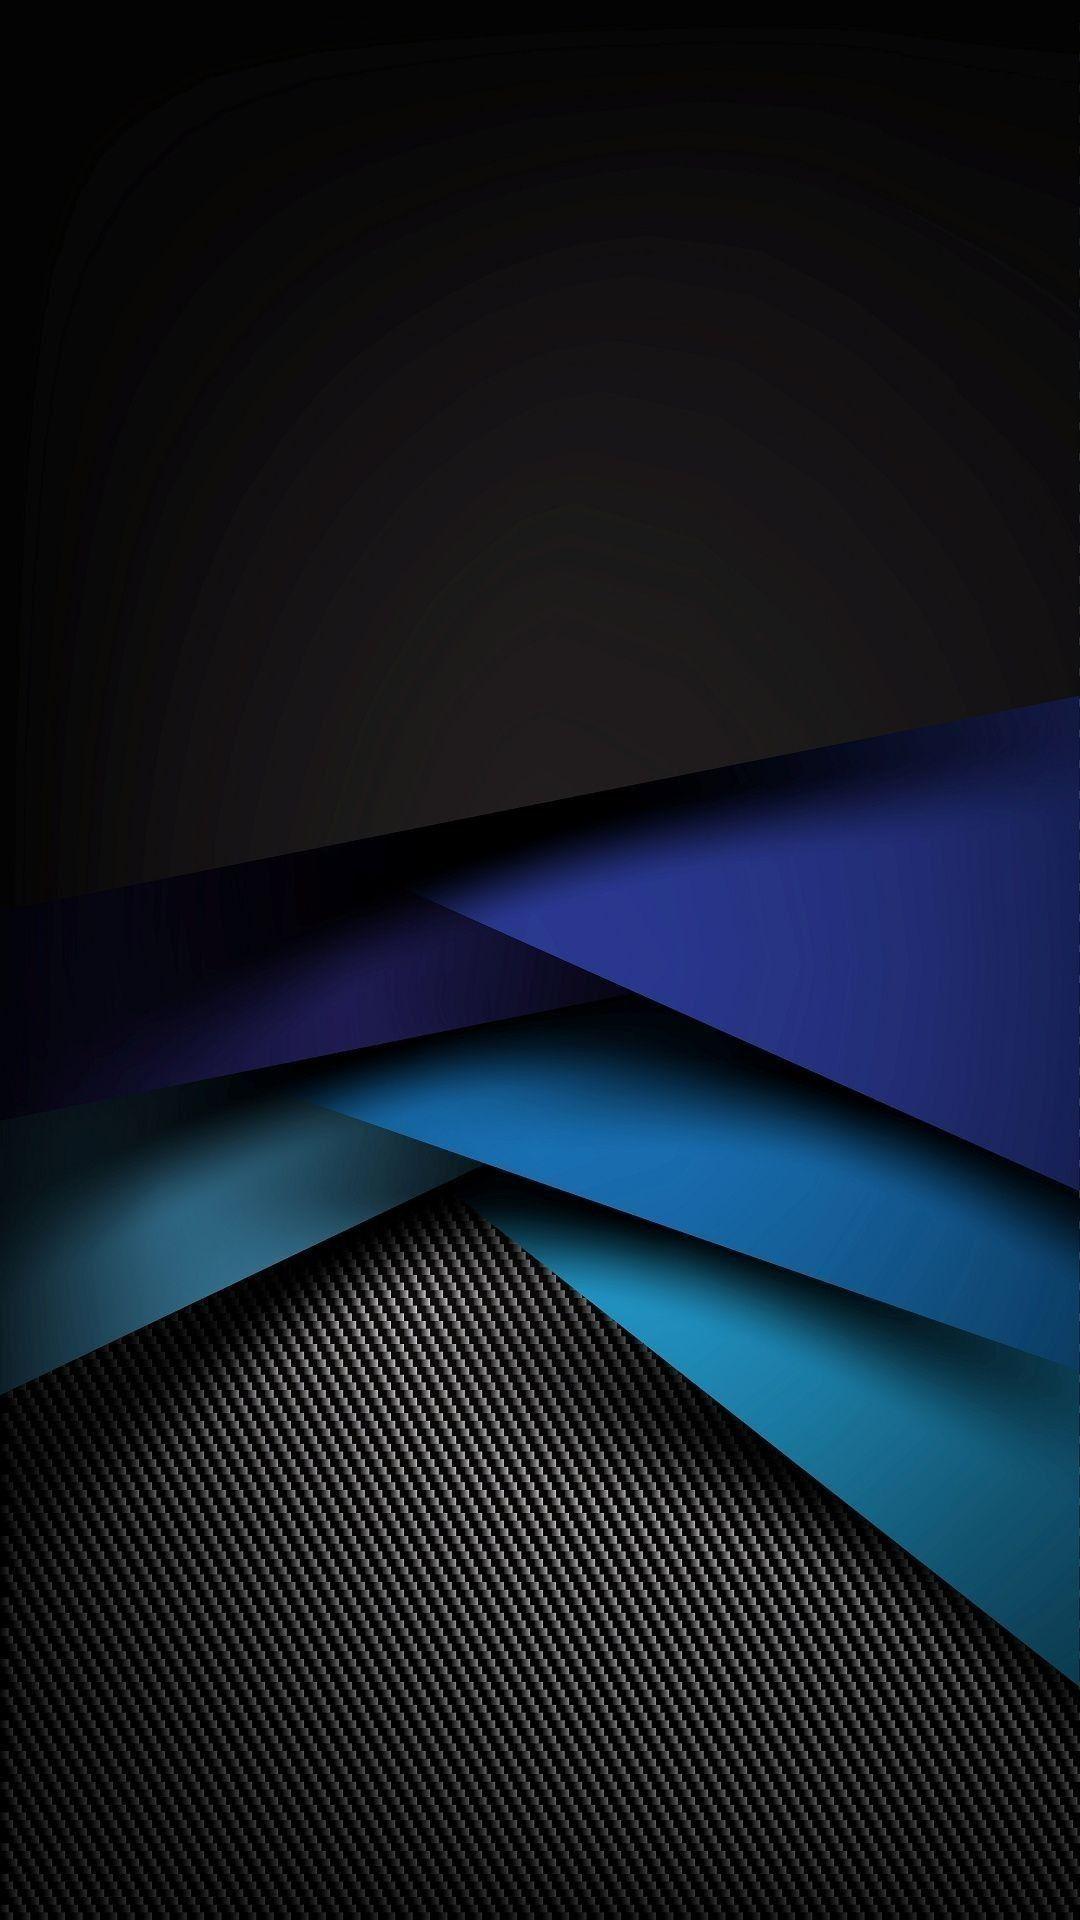 4k wallpaper blue Vectors & Illustrations for Free Download | Freepik